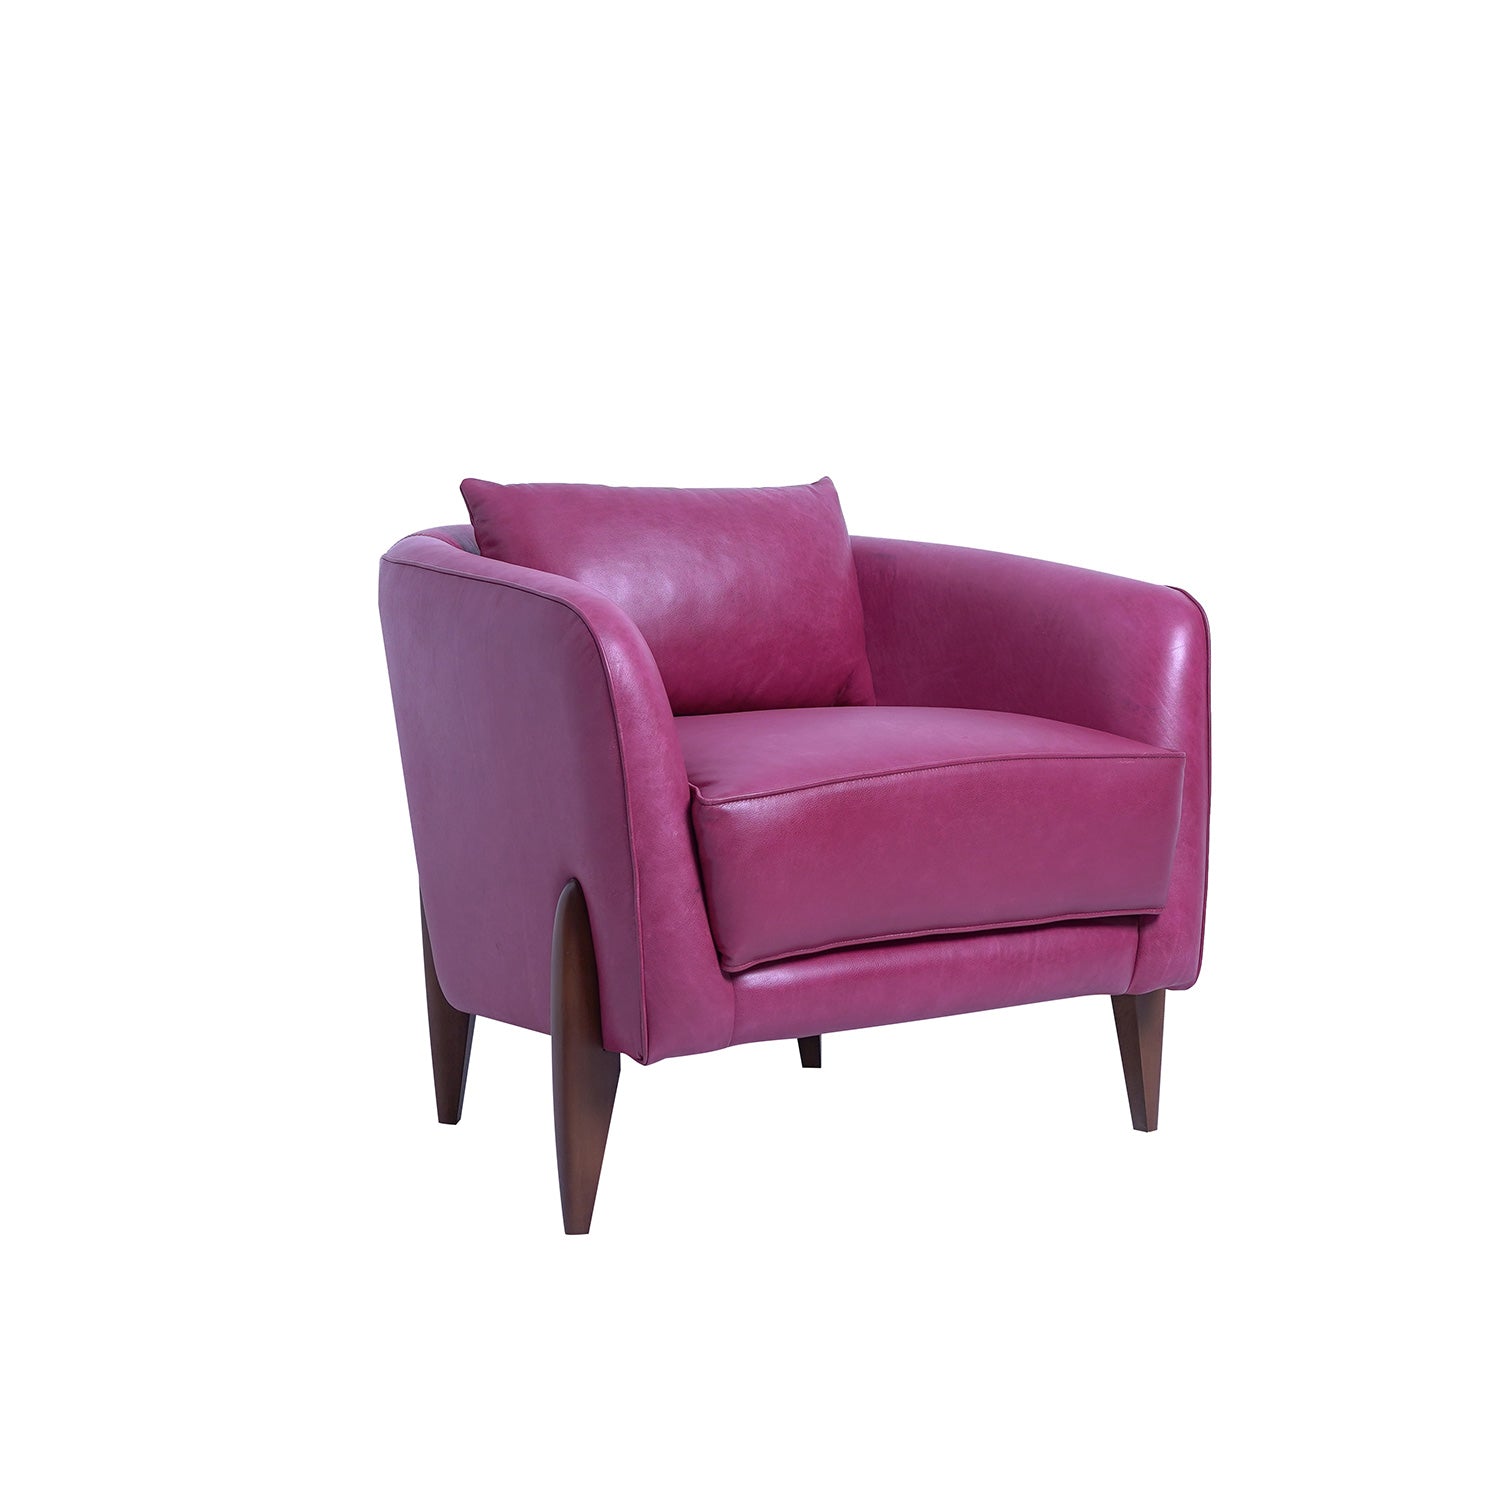 Byrne Ara Antigo Leather Chair Garnet Side Angle